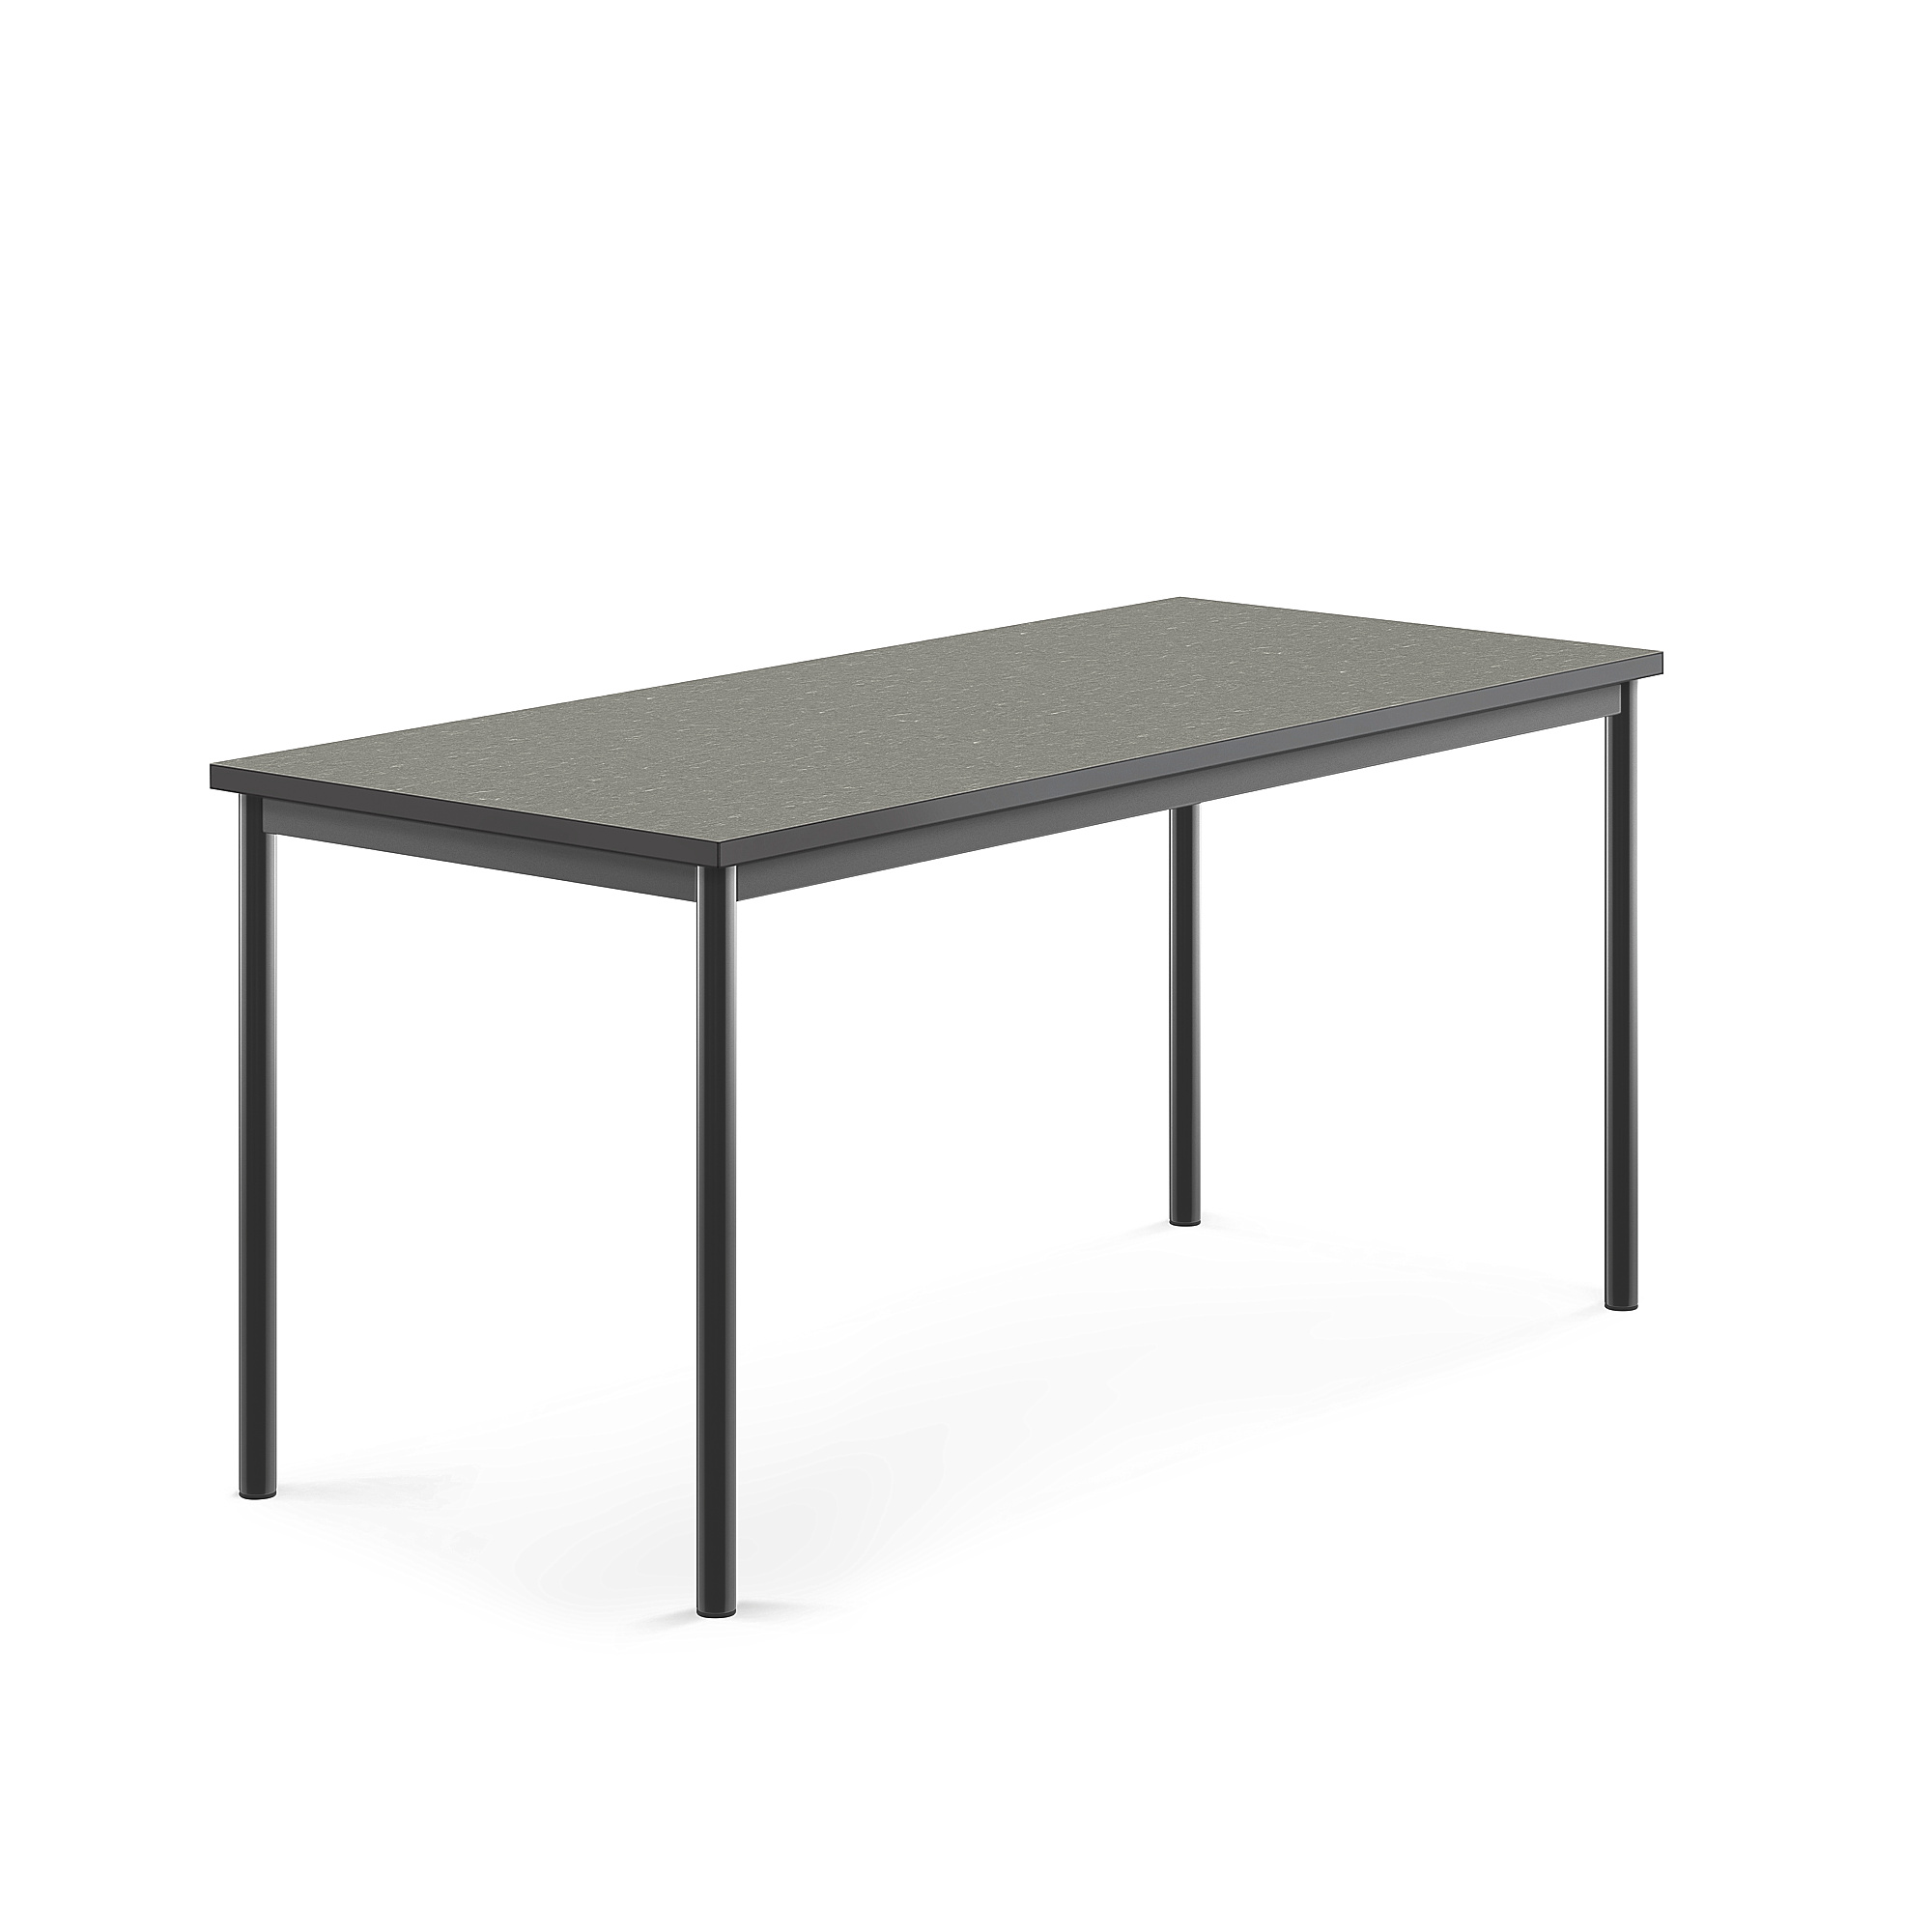 Stůl SONITUS, 1600x700x720 mm, antracitově šedé nohy, deska s linoleem, tmavě šedá